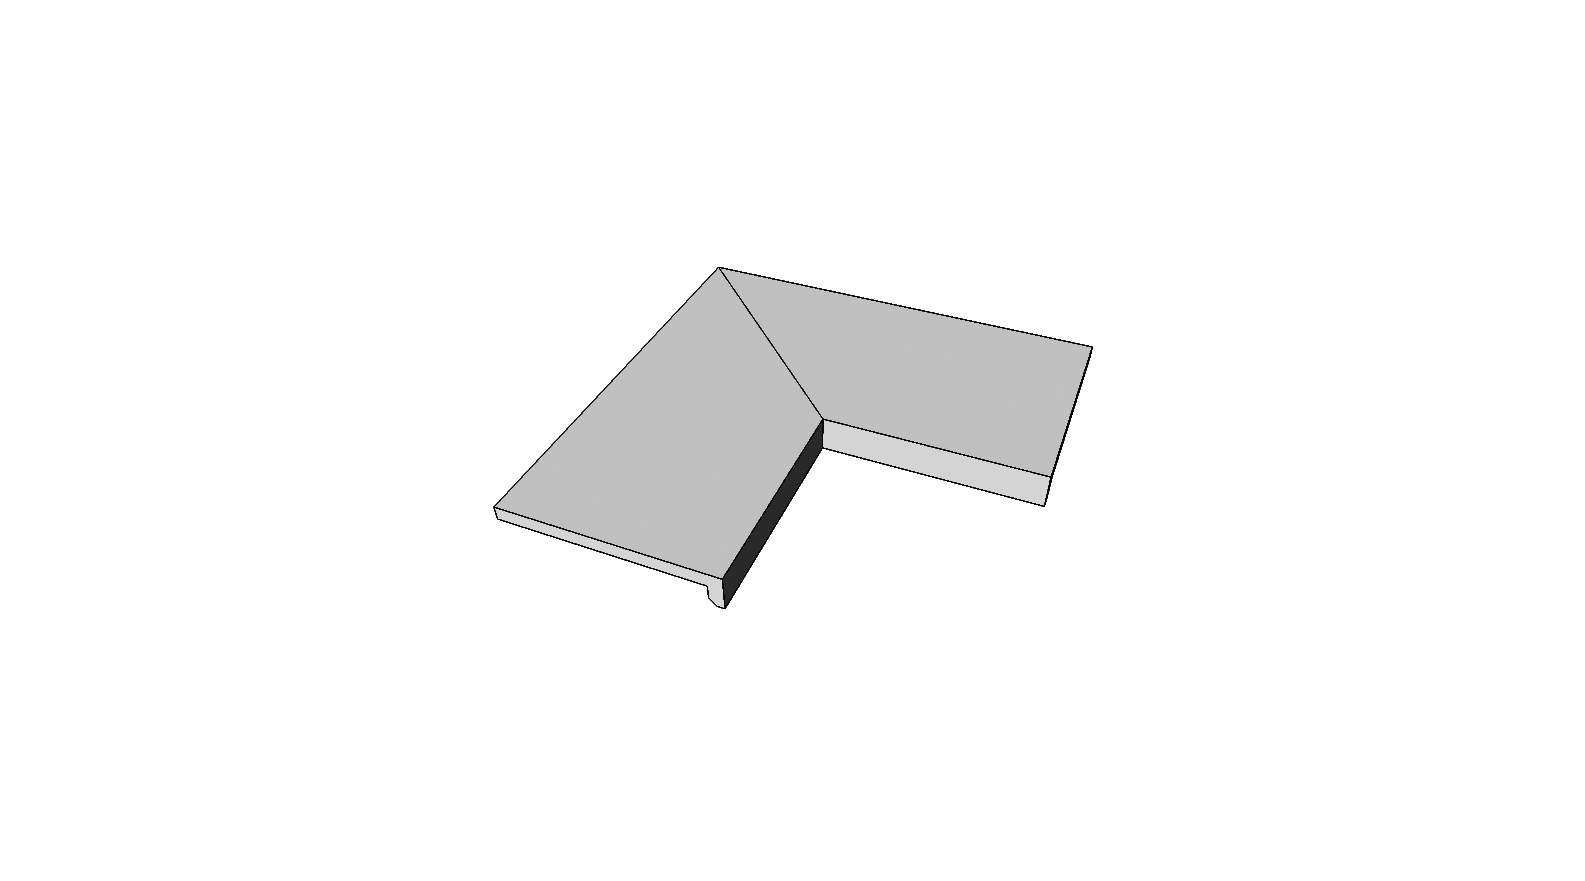 L-board stuck full internal angle (2 pcs) <span style="white-space:nowrap;">12"x24"</span>   <span style="white-space:nowrap;">thk. 20mm</span>